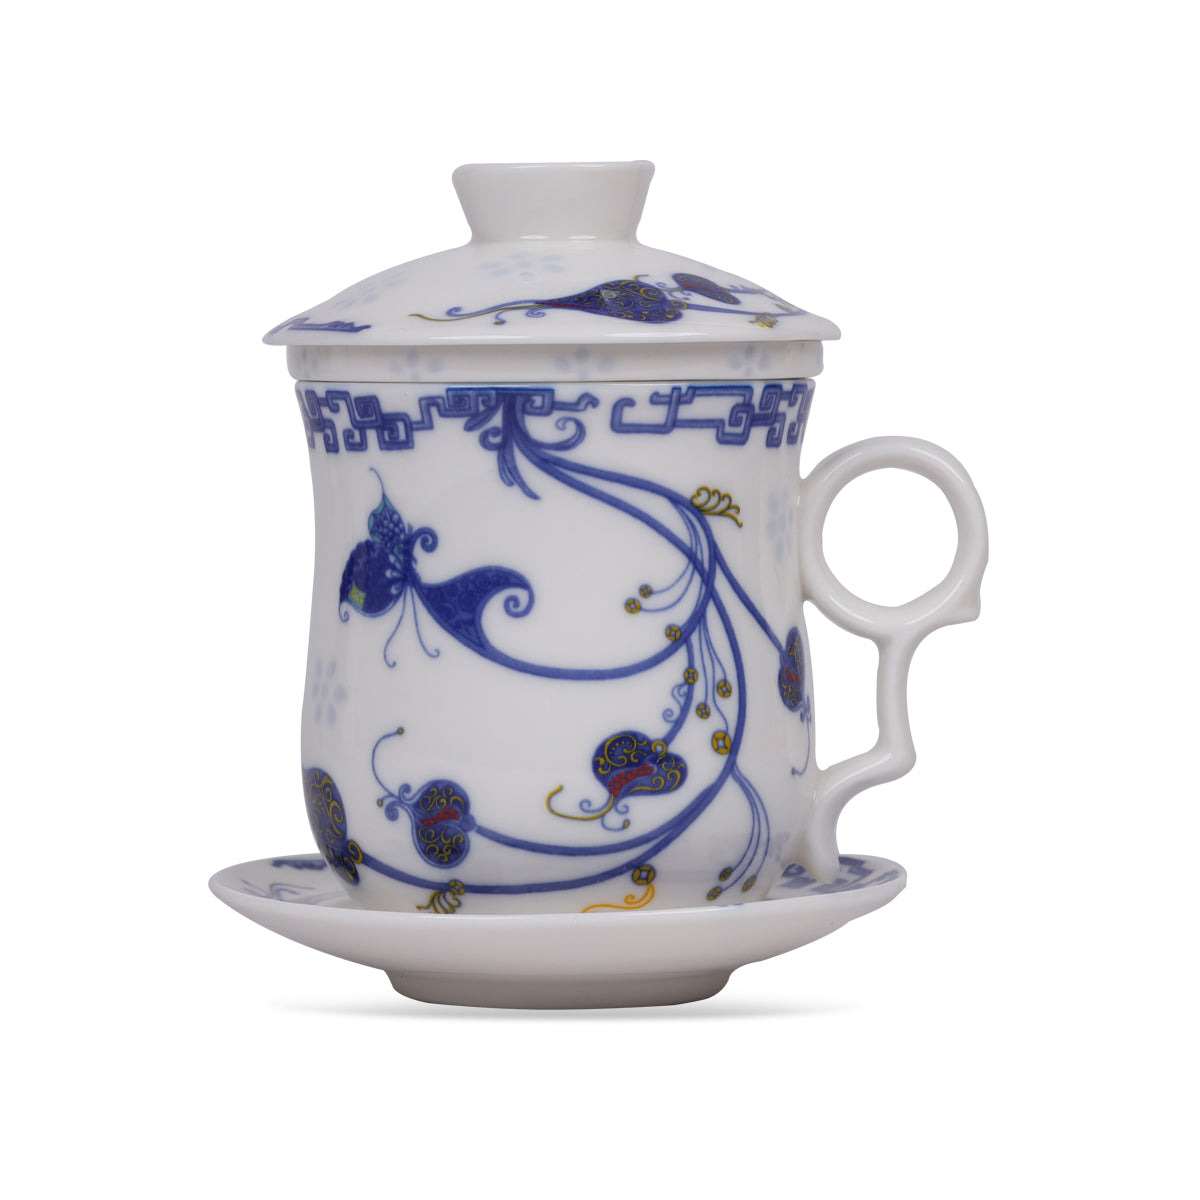 Tea Maker, tea Infuser, Tea Infuser Mug, Tea cup set